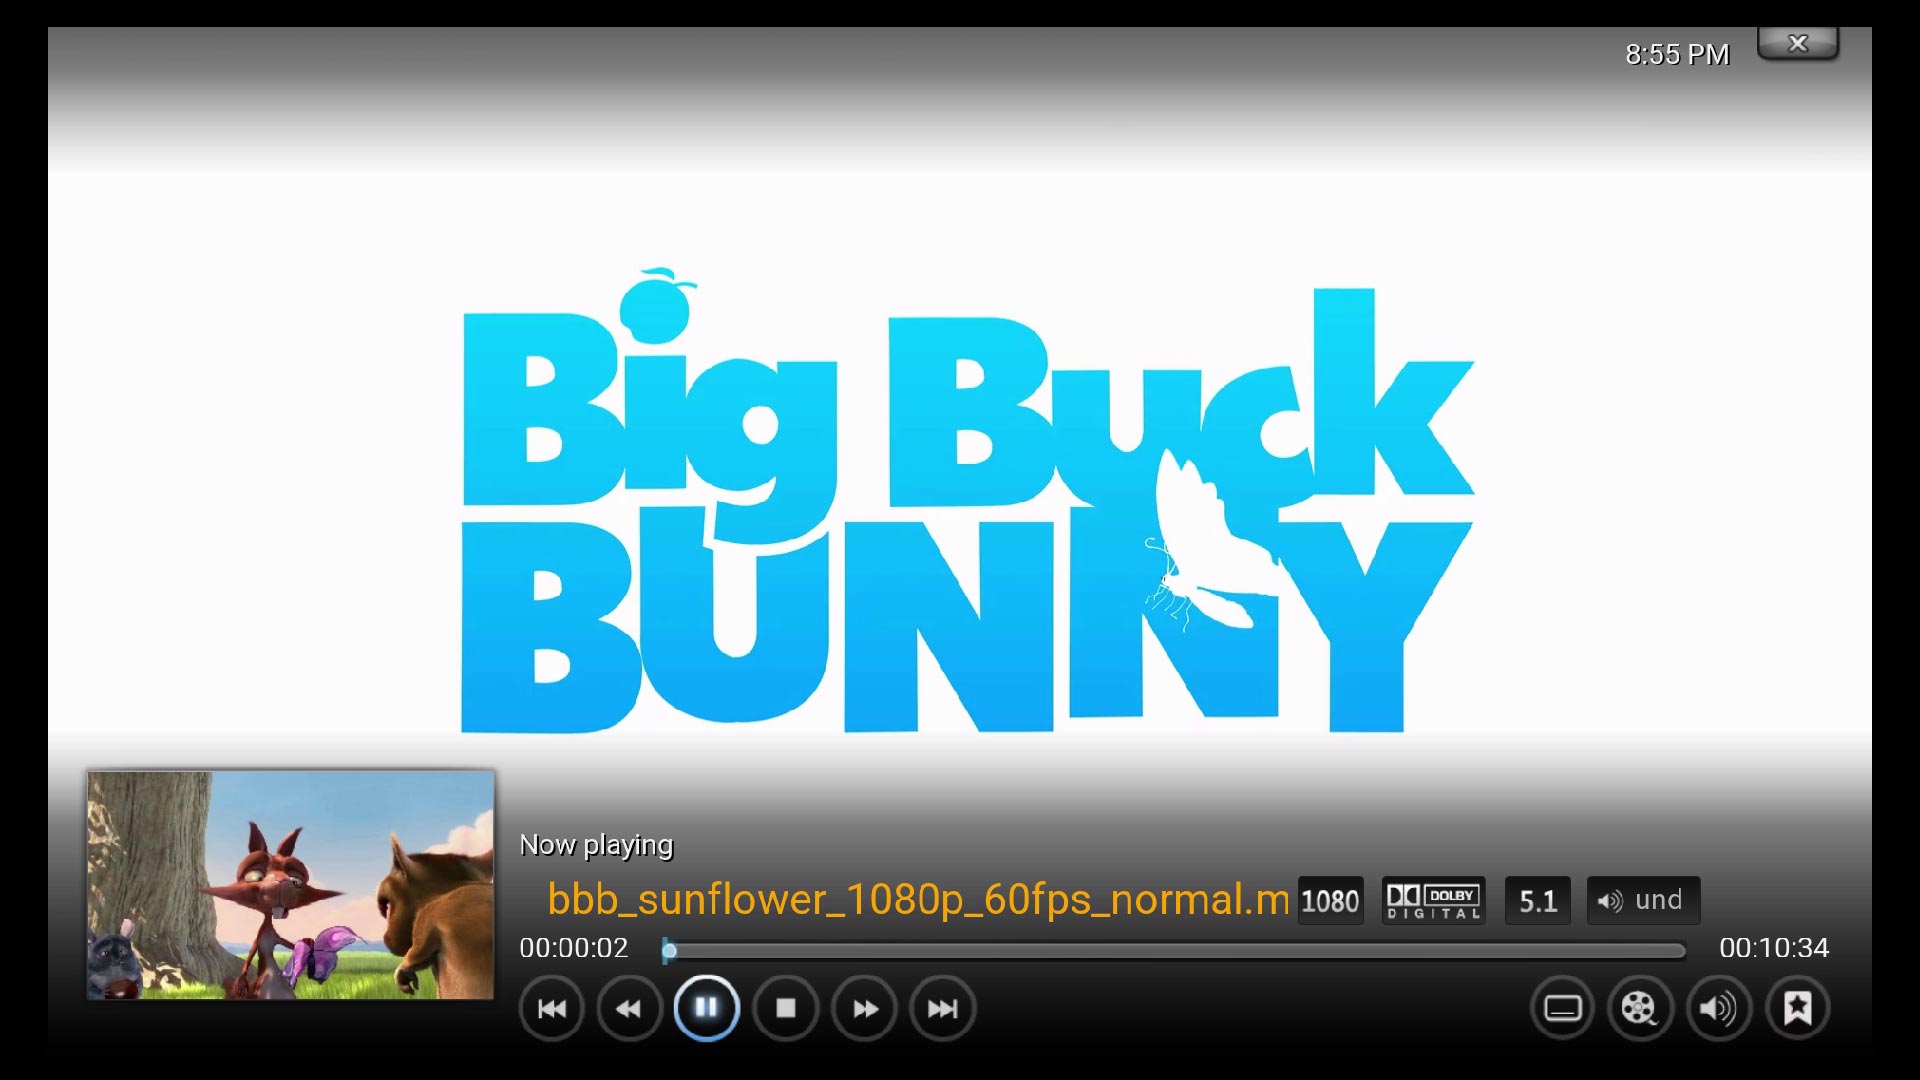 Kodi Jarvis v16 - Big Buck Bunny with On Screen Display OSD working properly again on the Ouya.